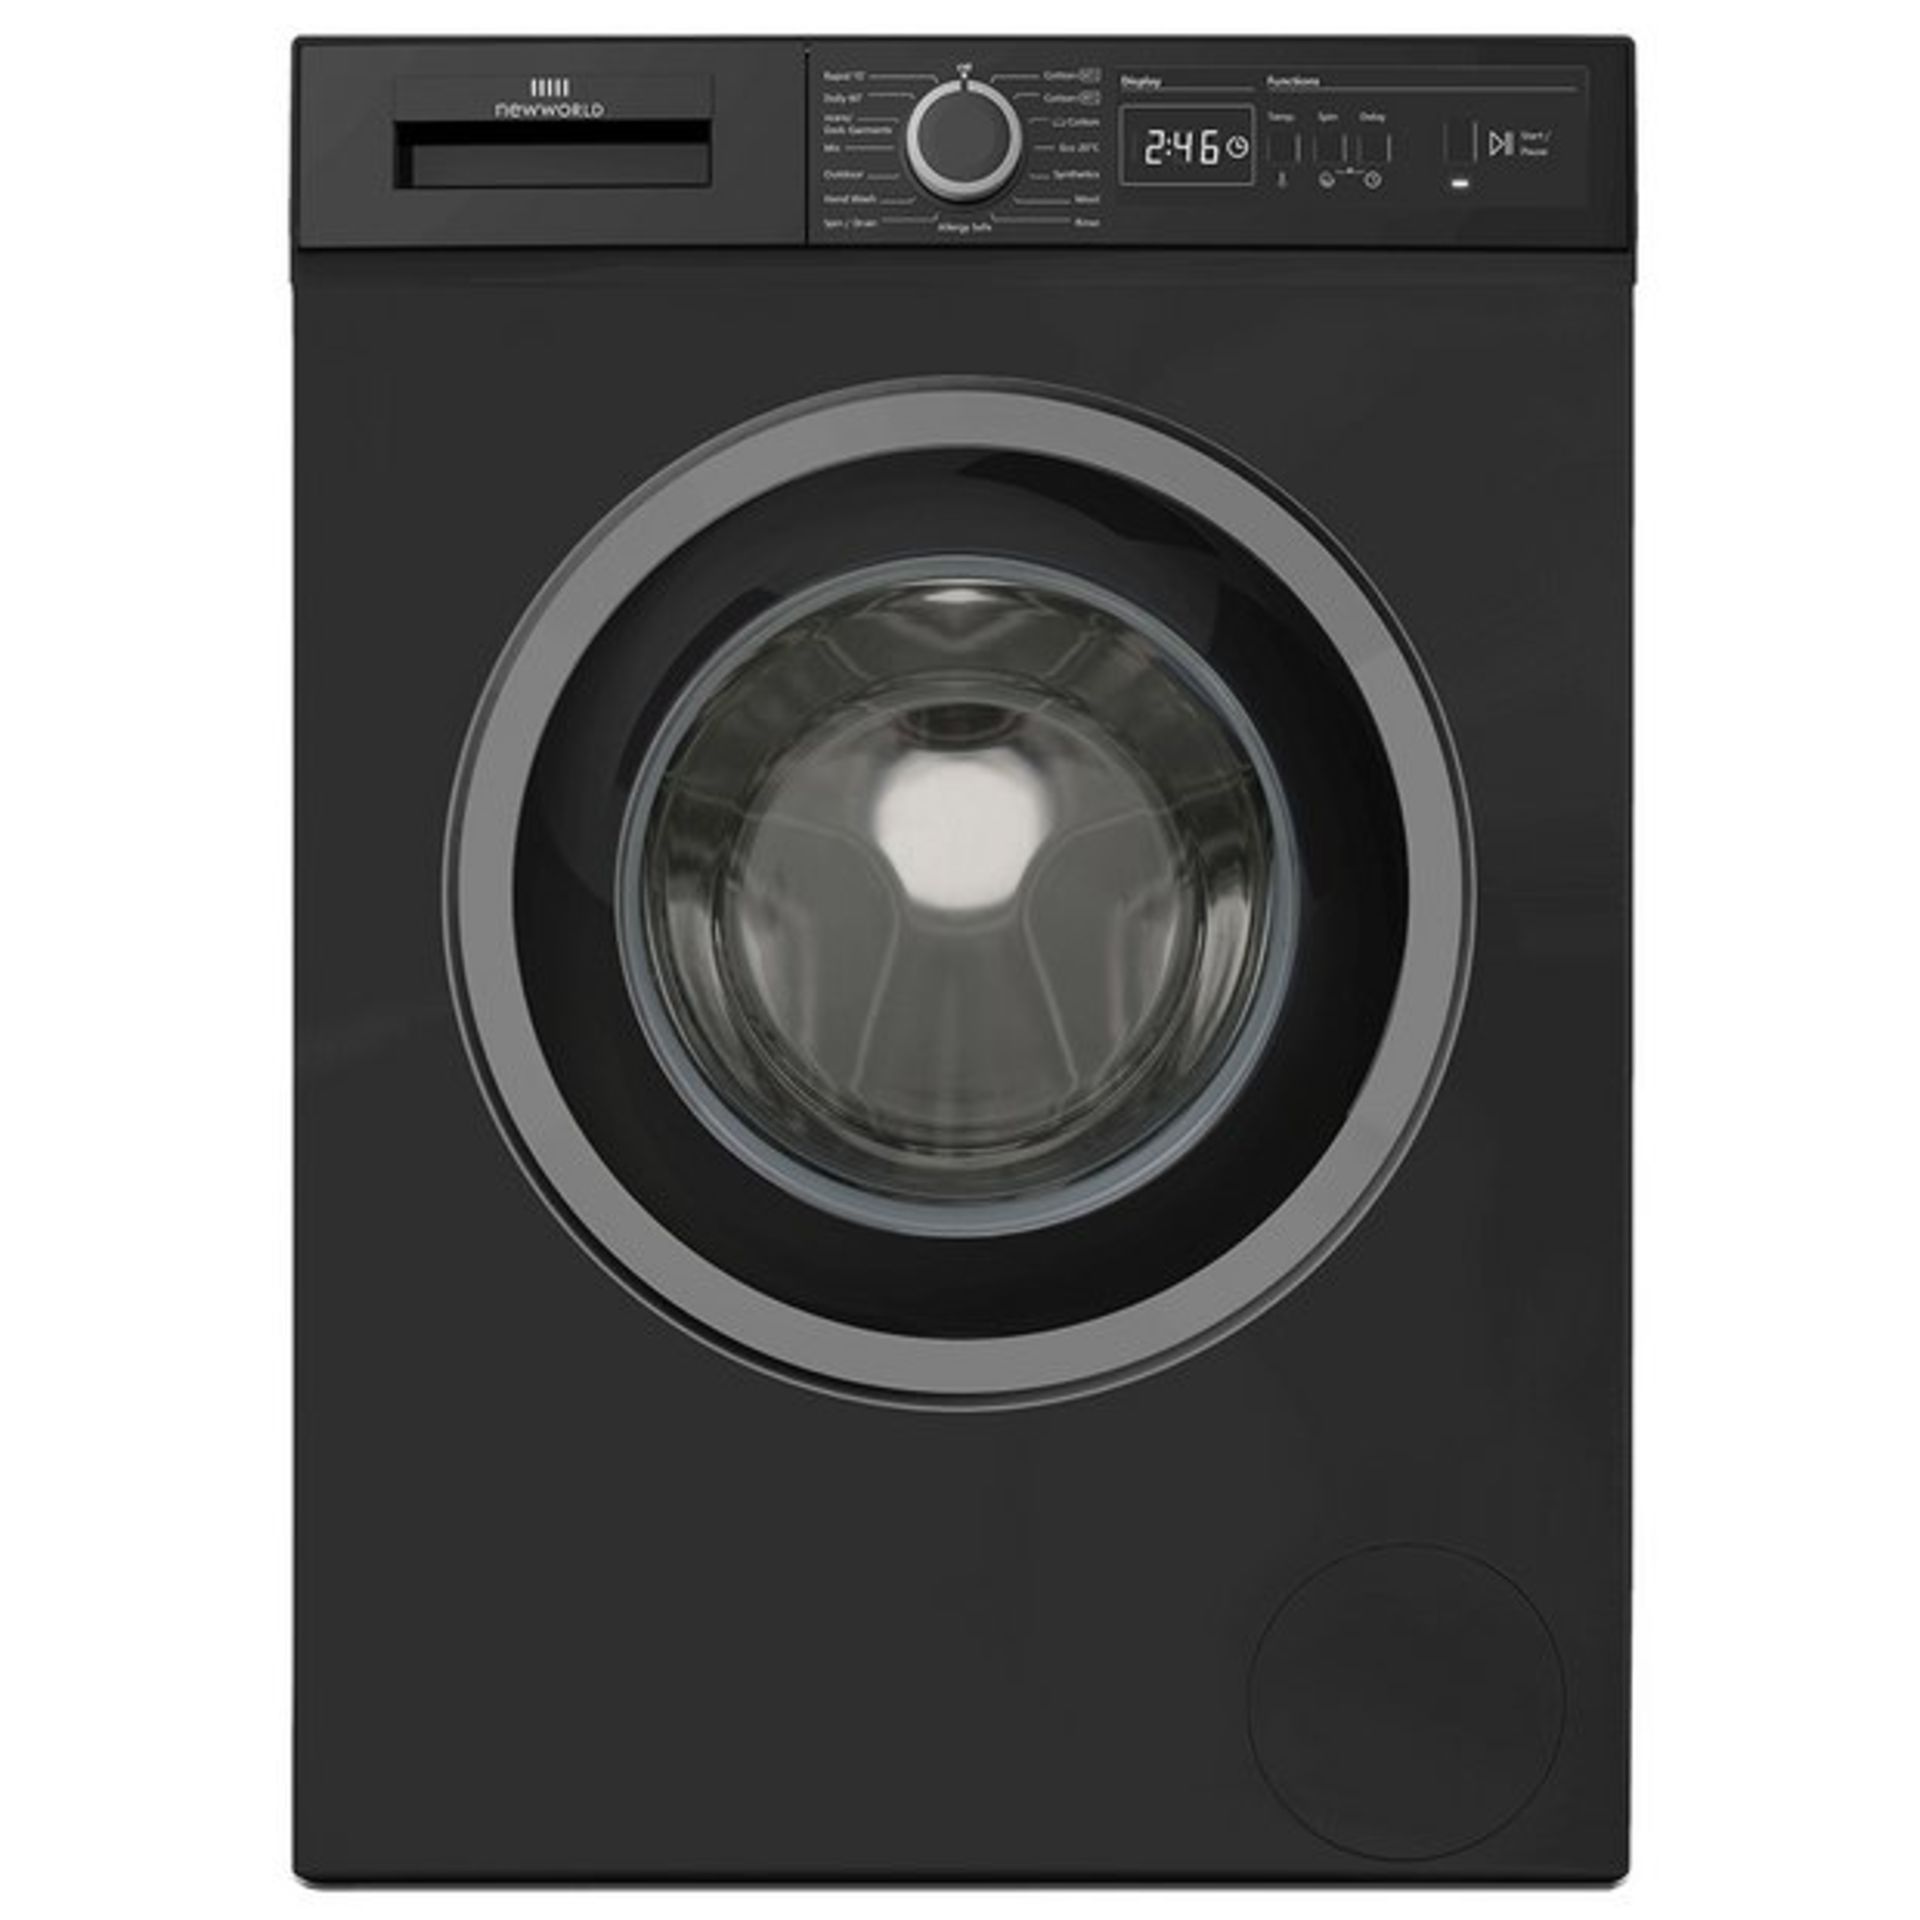 + VAT Grade A/B New World NWDHT714B 7Kg 1400 Spin Washing Machine - A+++ Energy Rating - 15